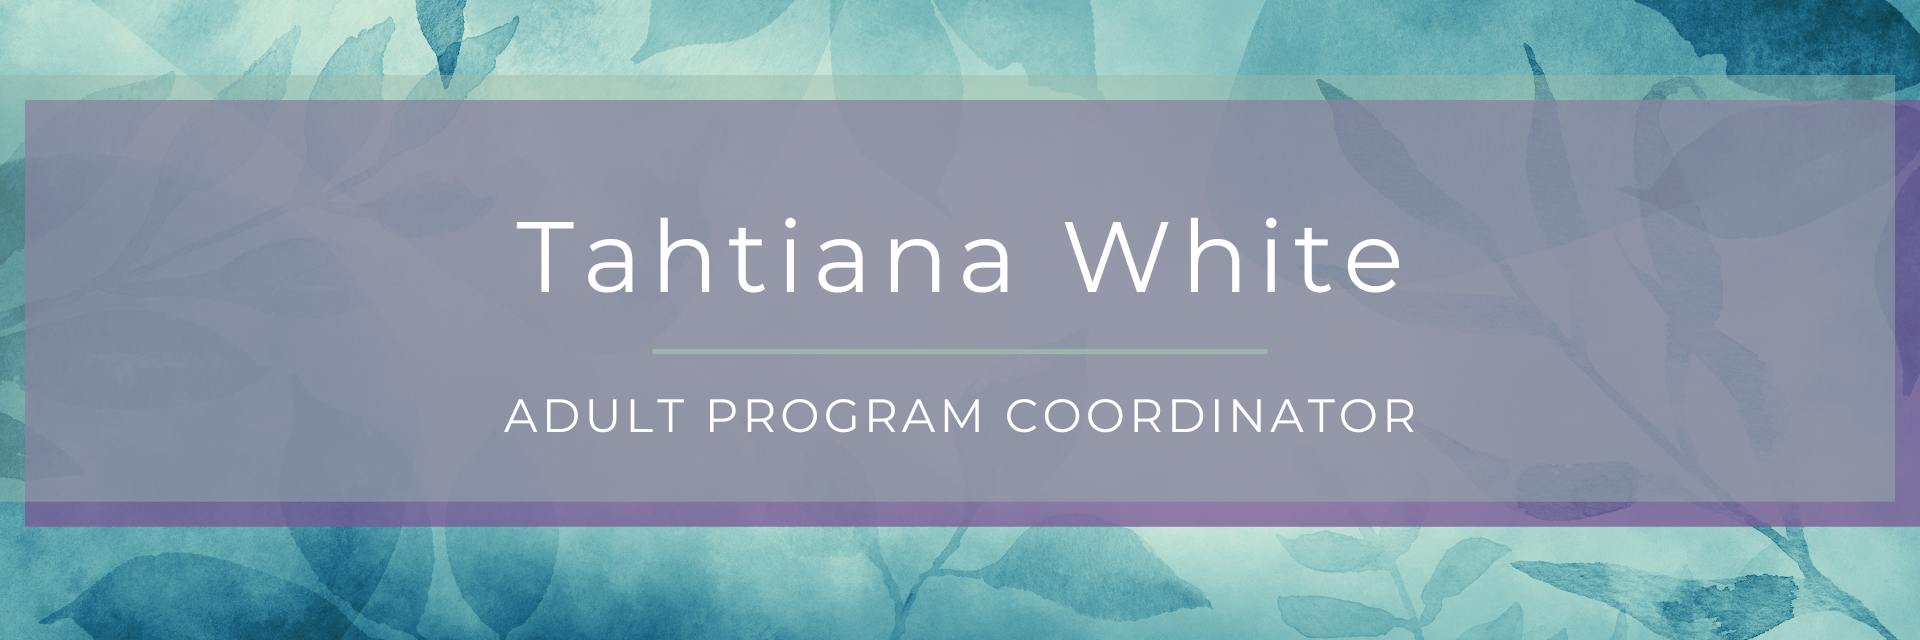 Tahtiana White Adult Program Coordinator